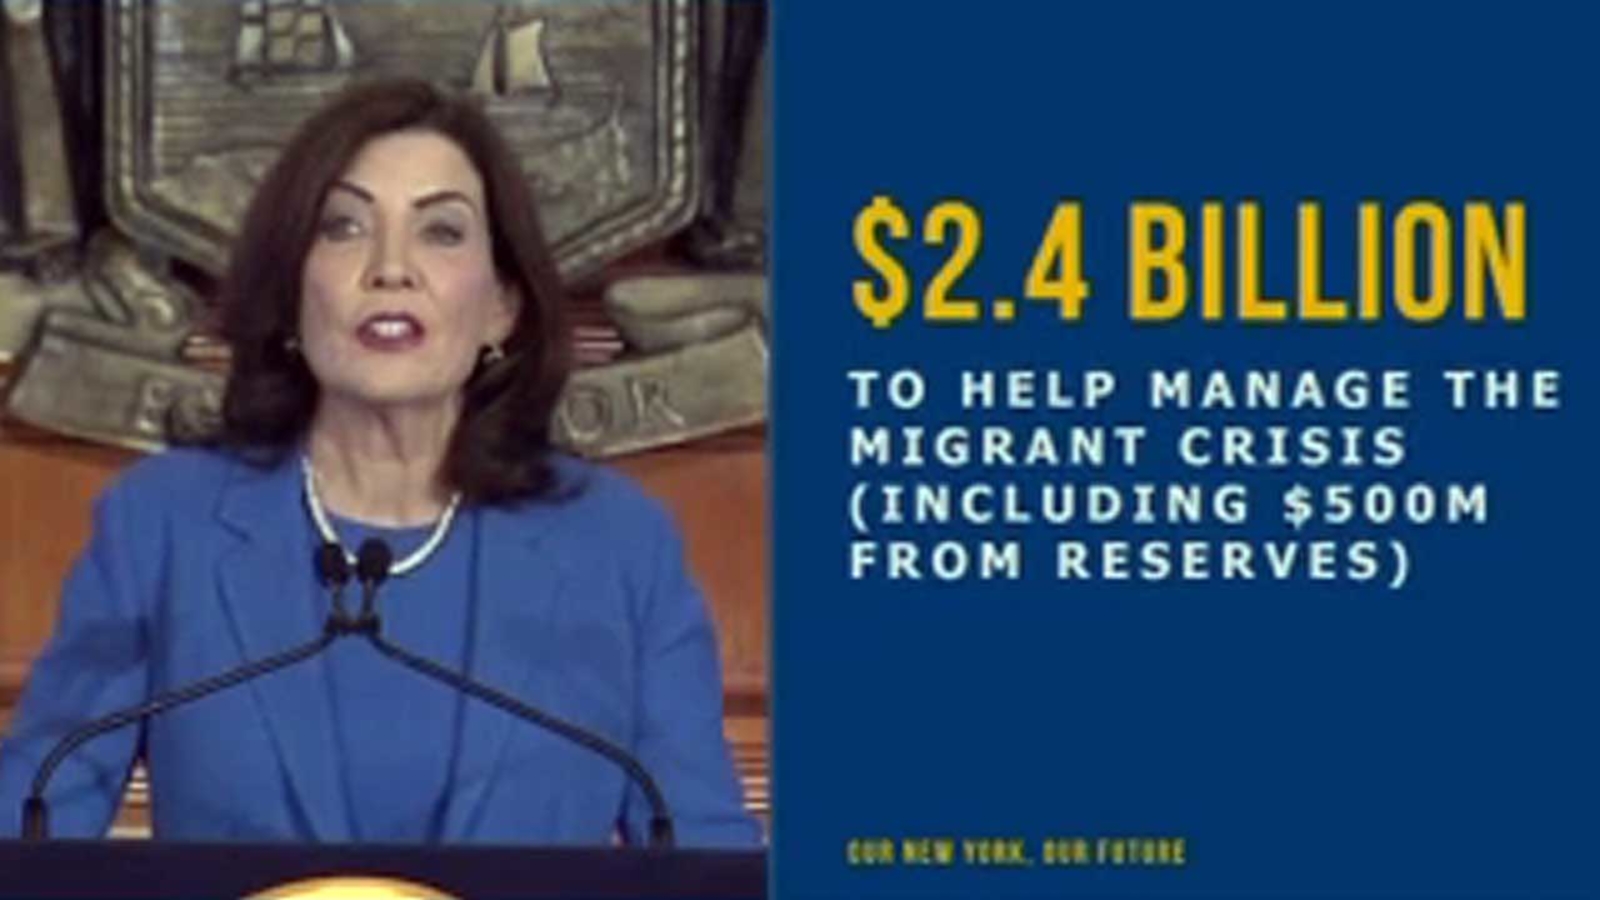  Gov. Hochul unveils $233B budget proposal, with $2.4B for NYC asylum seeker crisis 